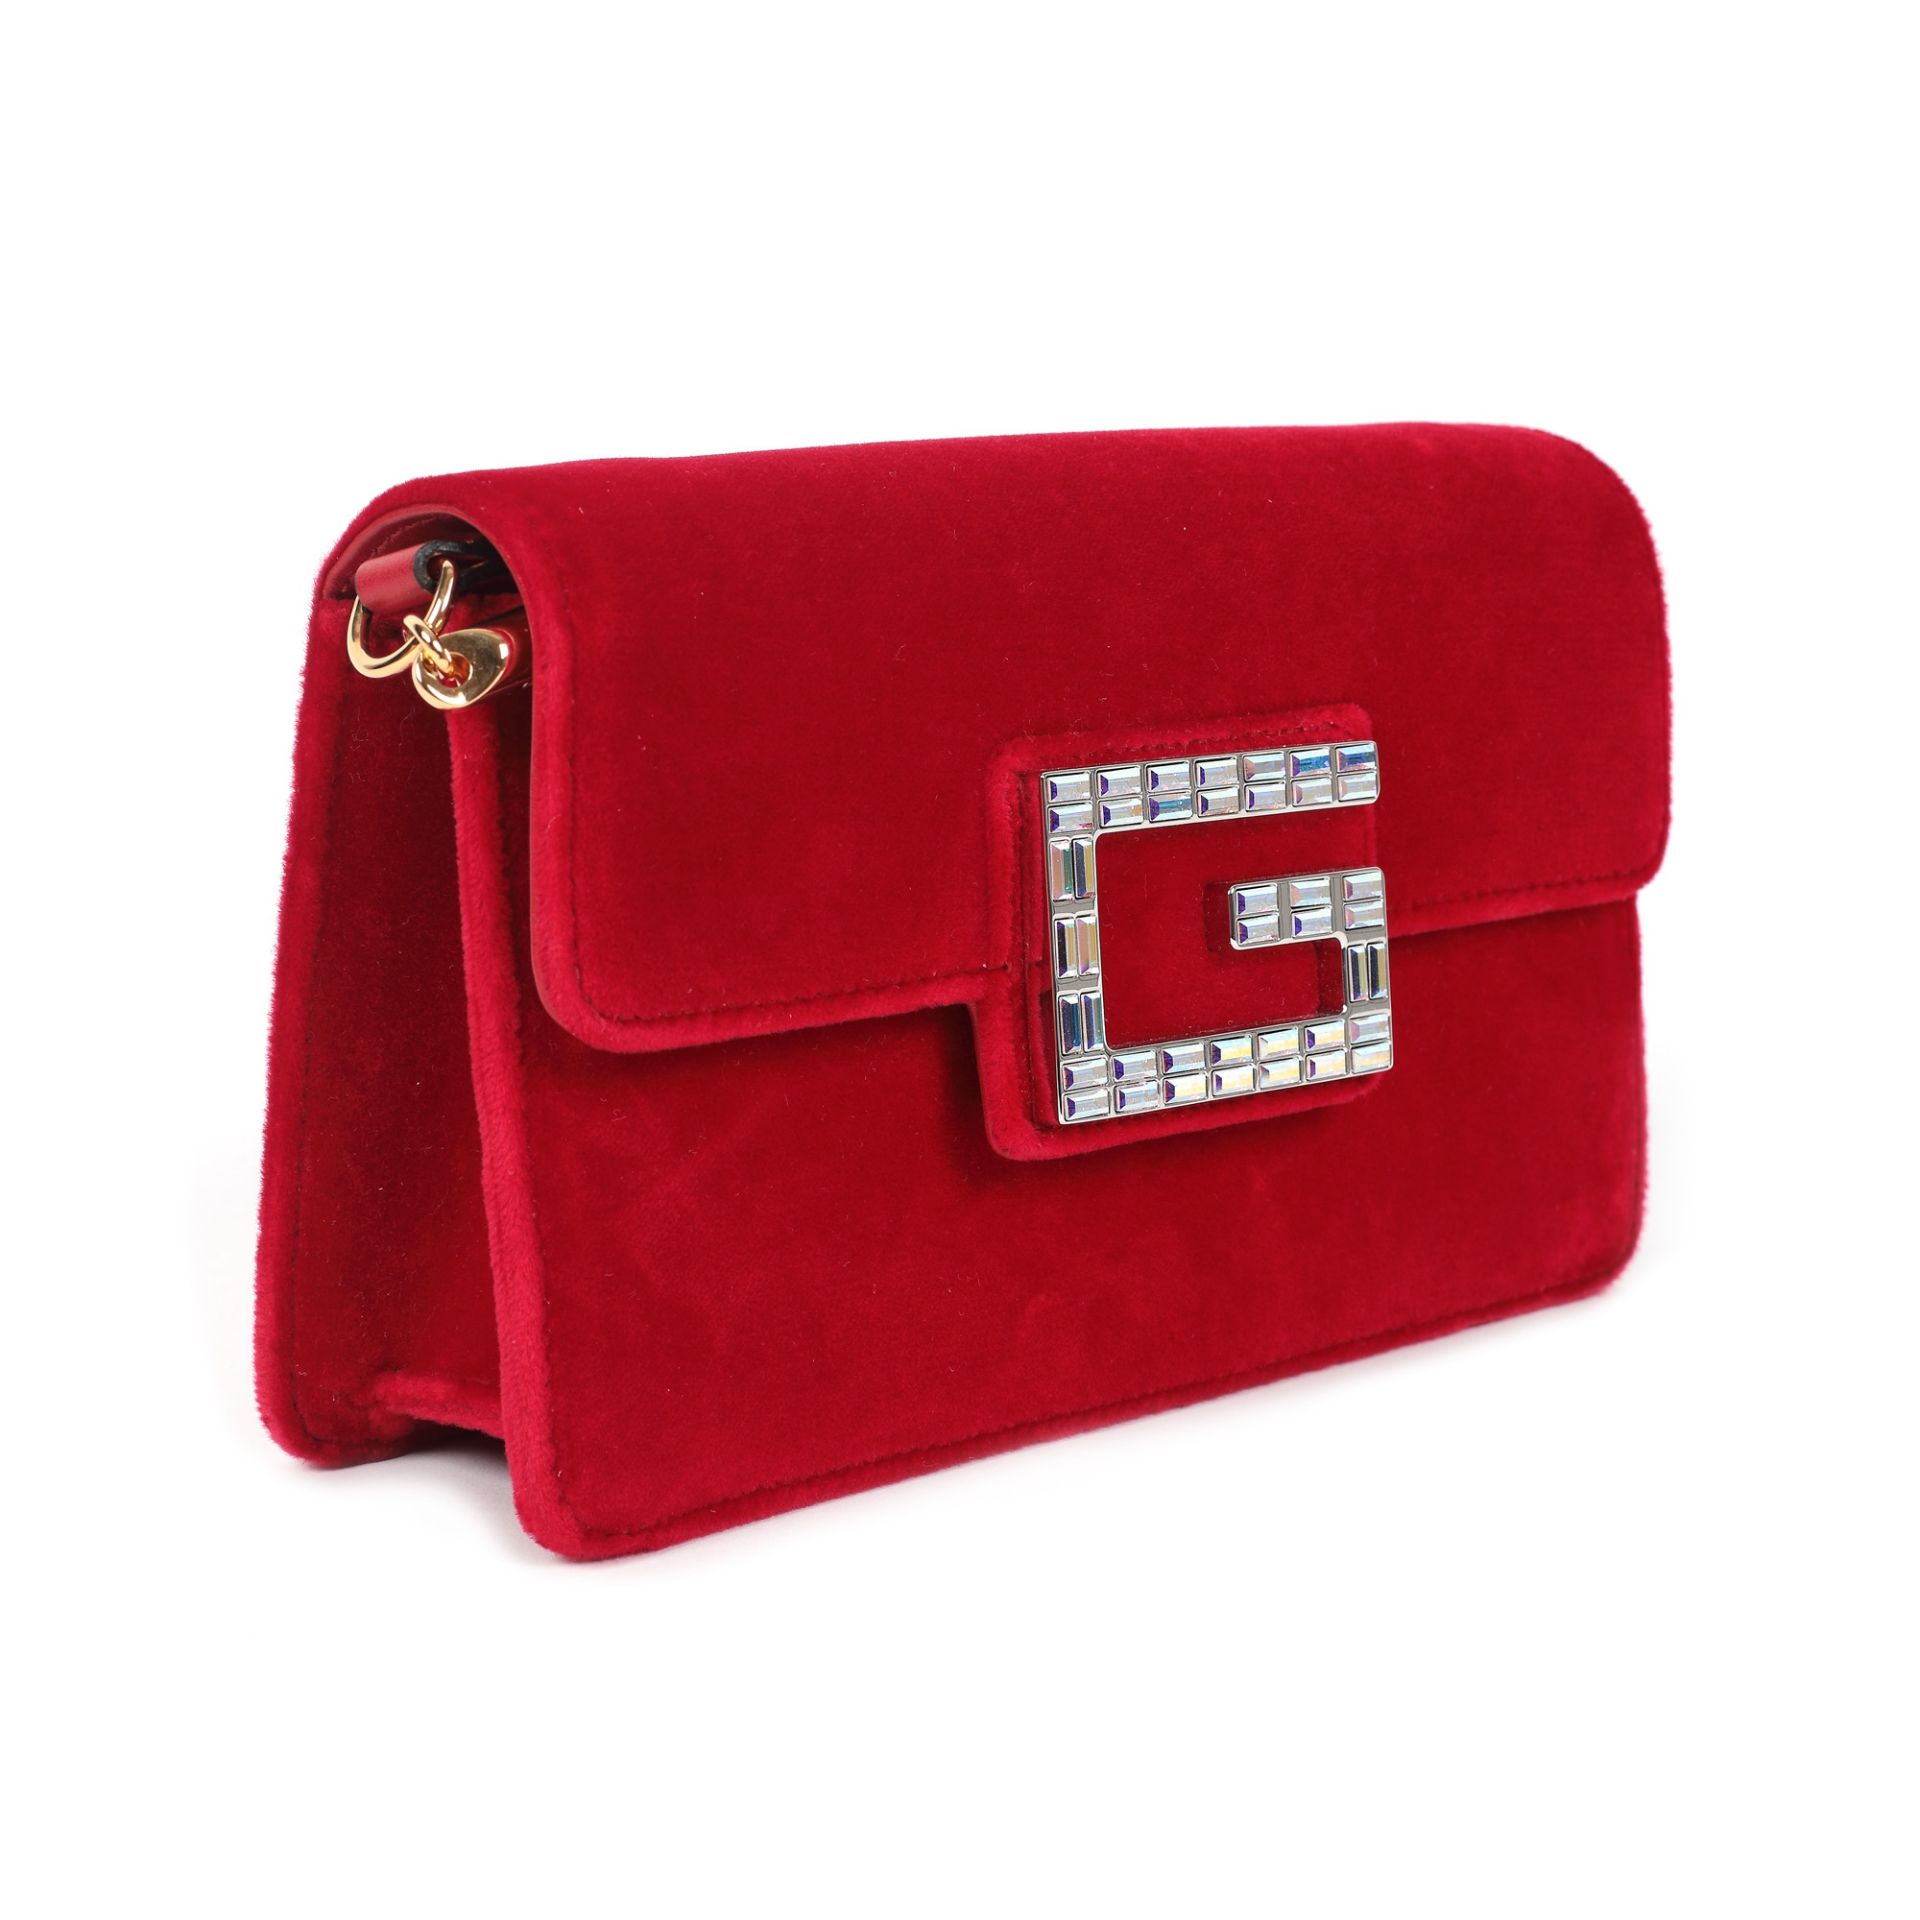 "Velvet Broadway" - Gucci bag, silk, red - Image 2 of 5